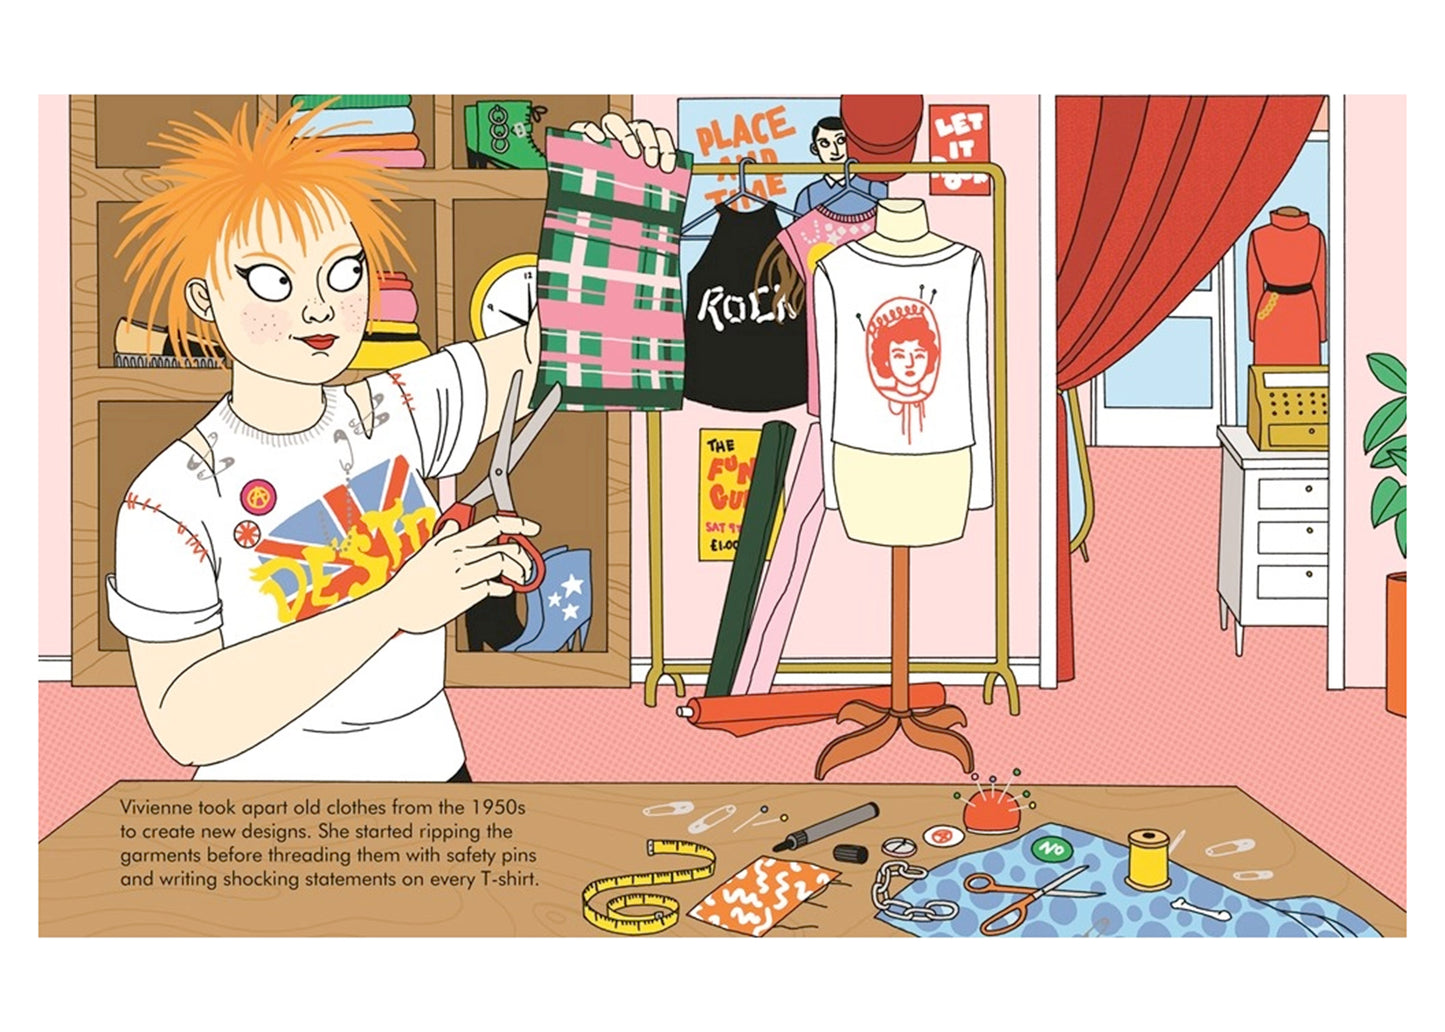 Little People, Big Dreams: Vivienne Westwood Children's Book